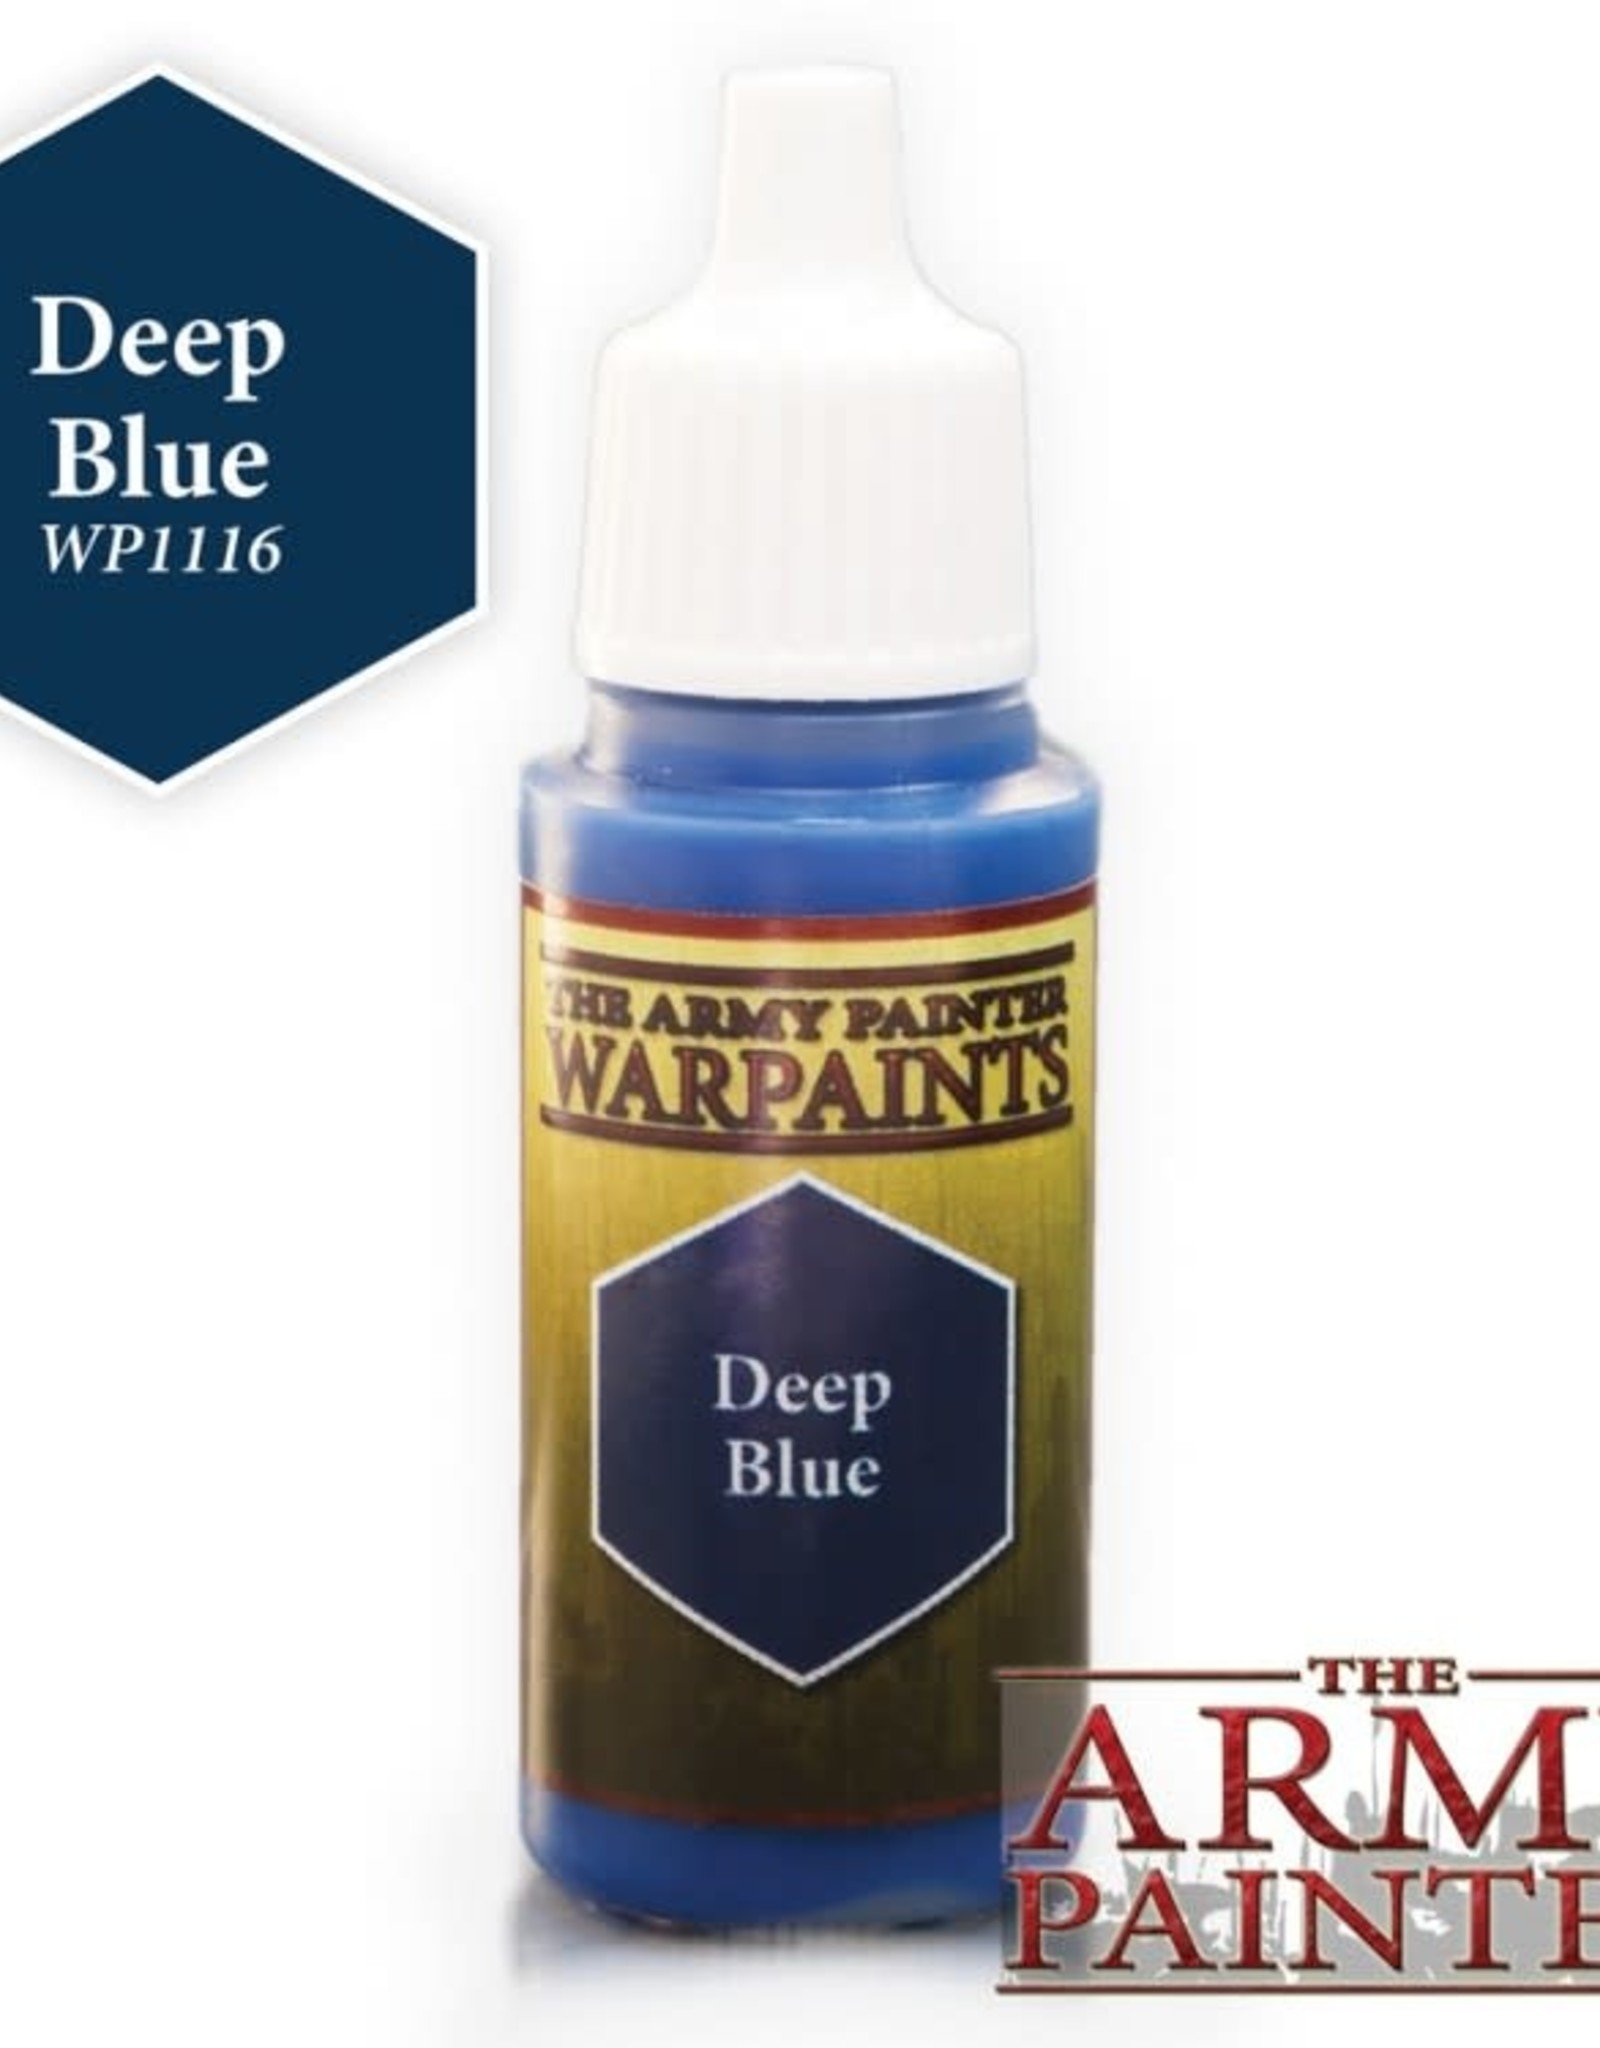 The Army Painter Warpaints - Deep Blue